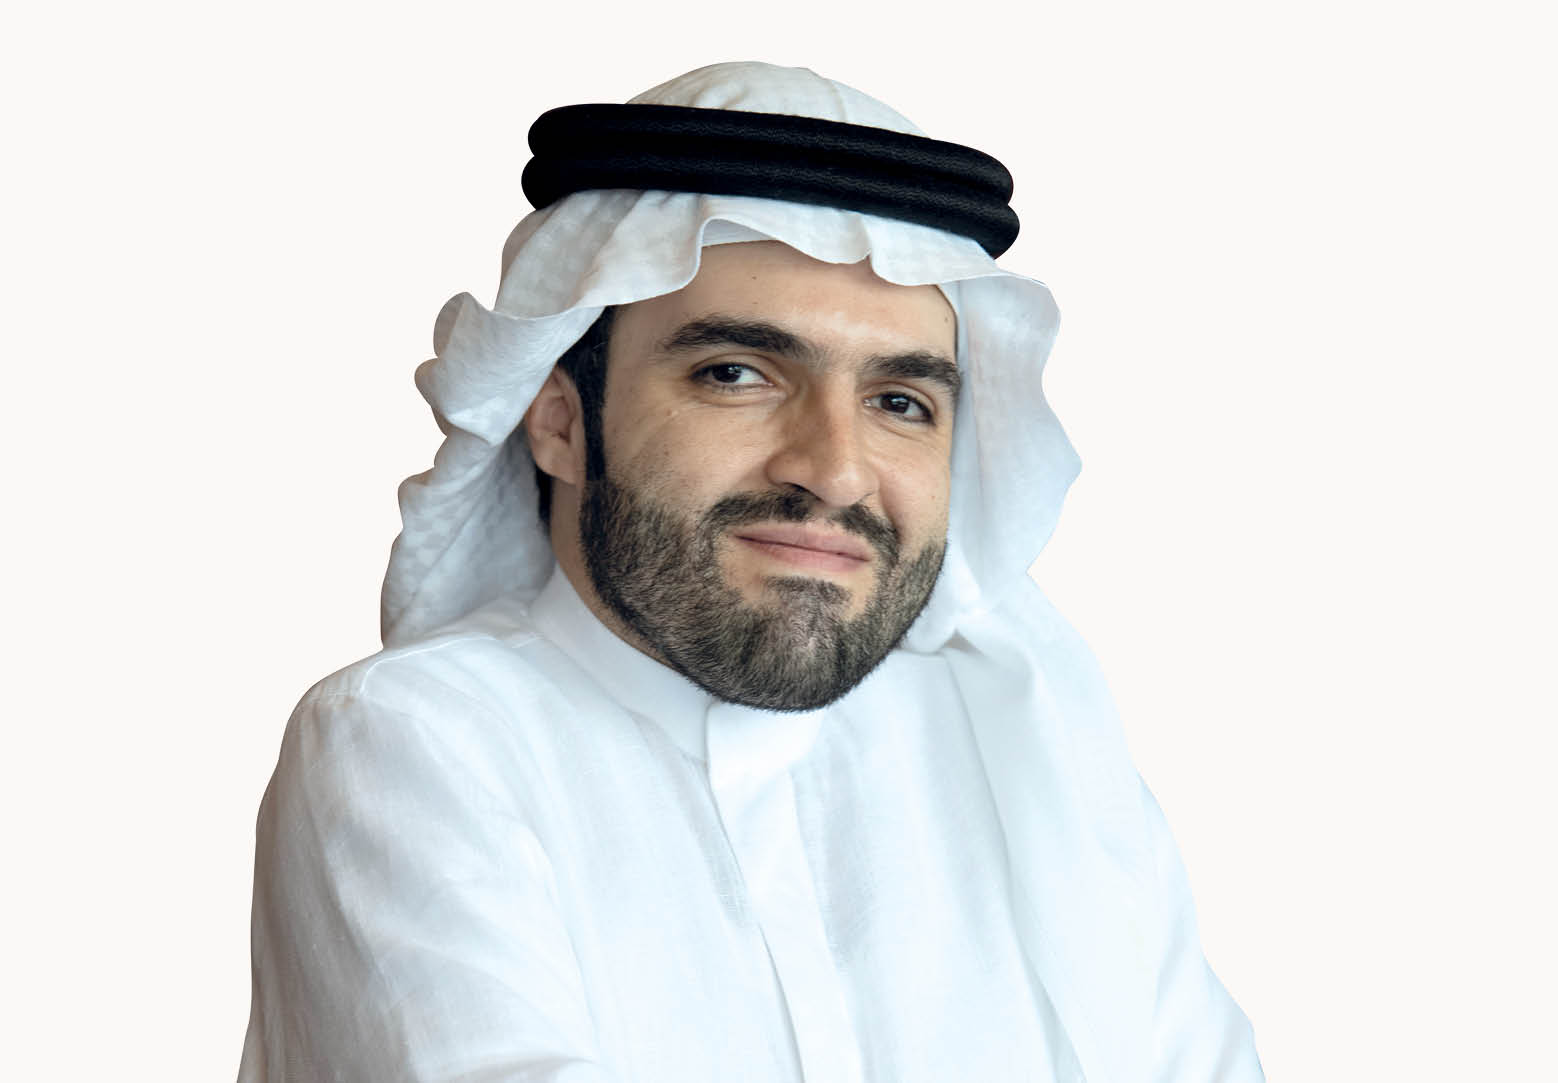 Majed M Al Tahan